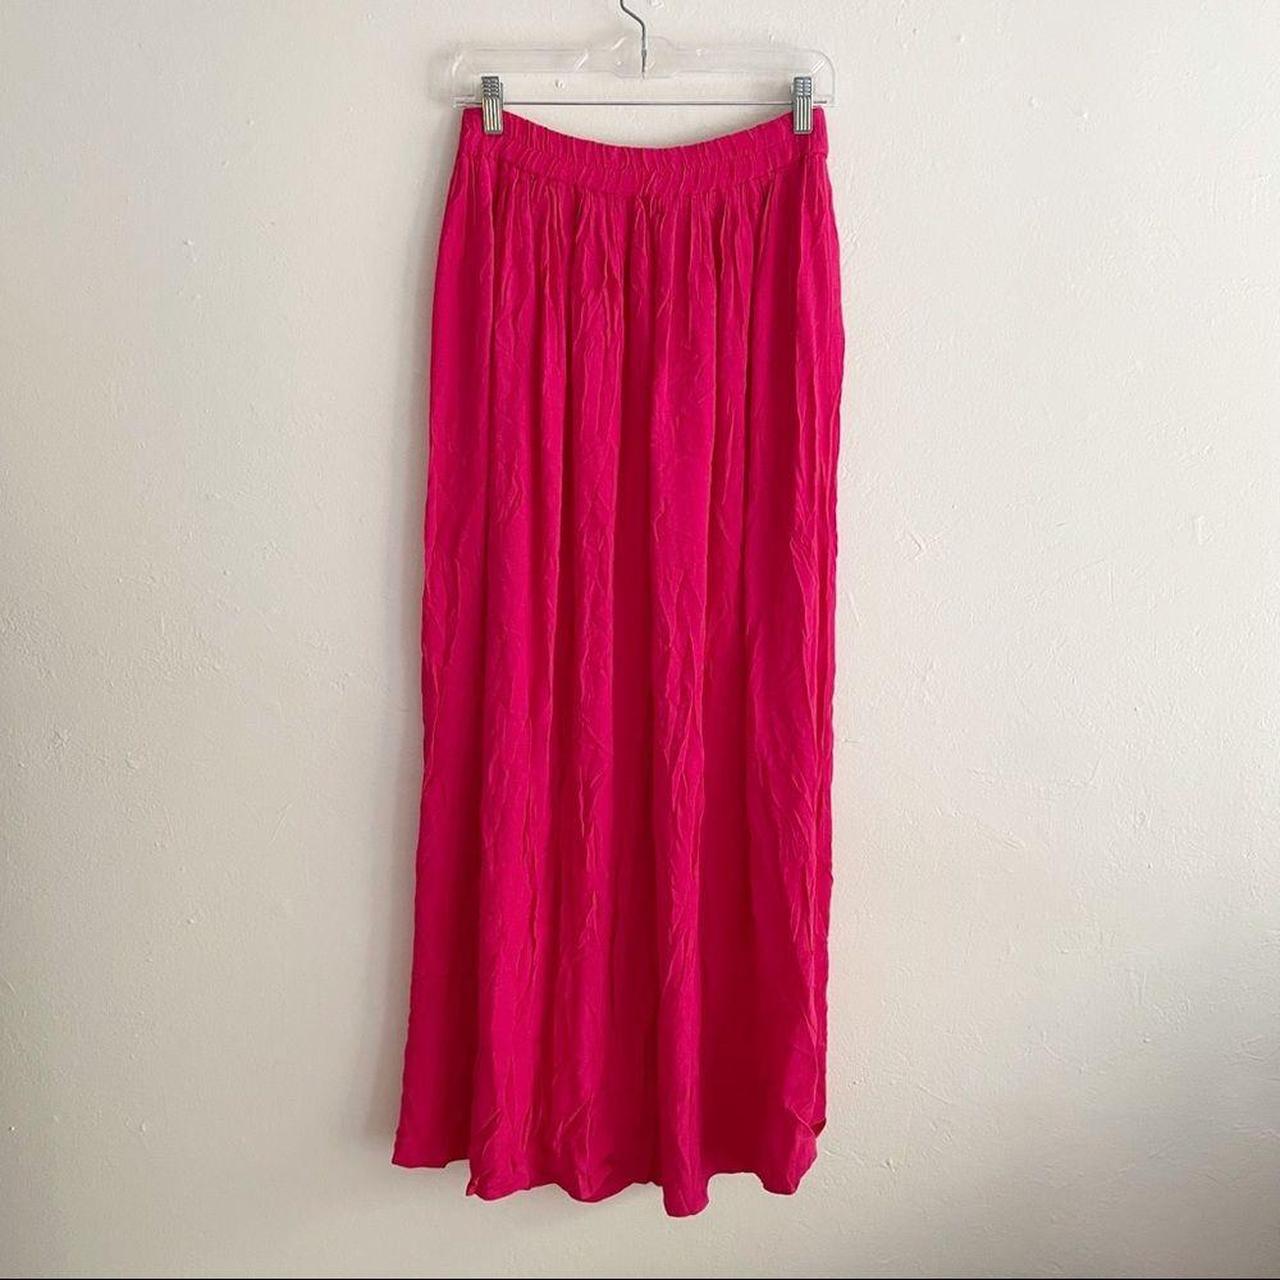 Zara Women's Pink Skirt